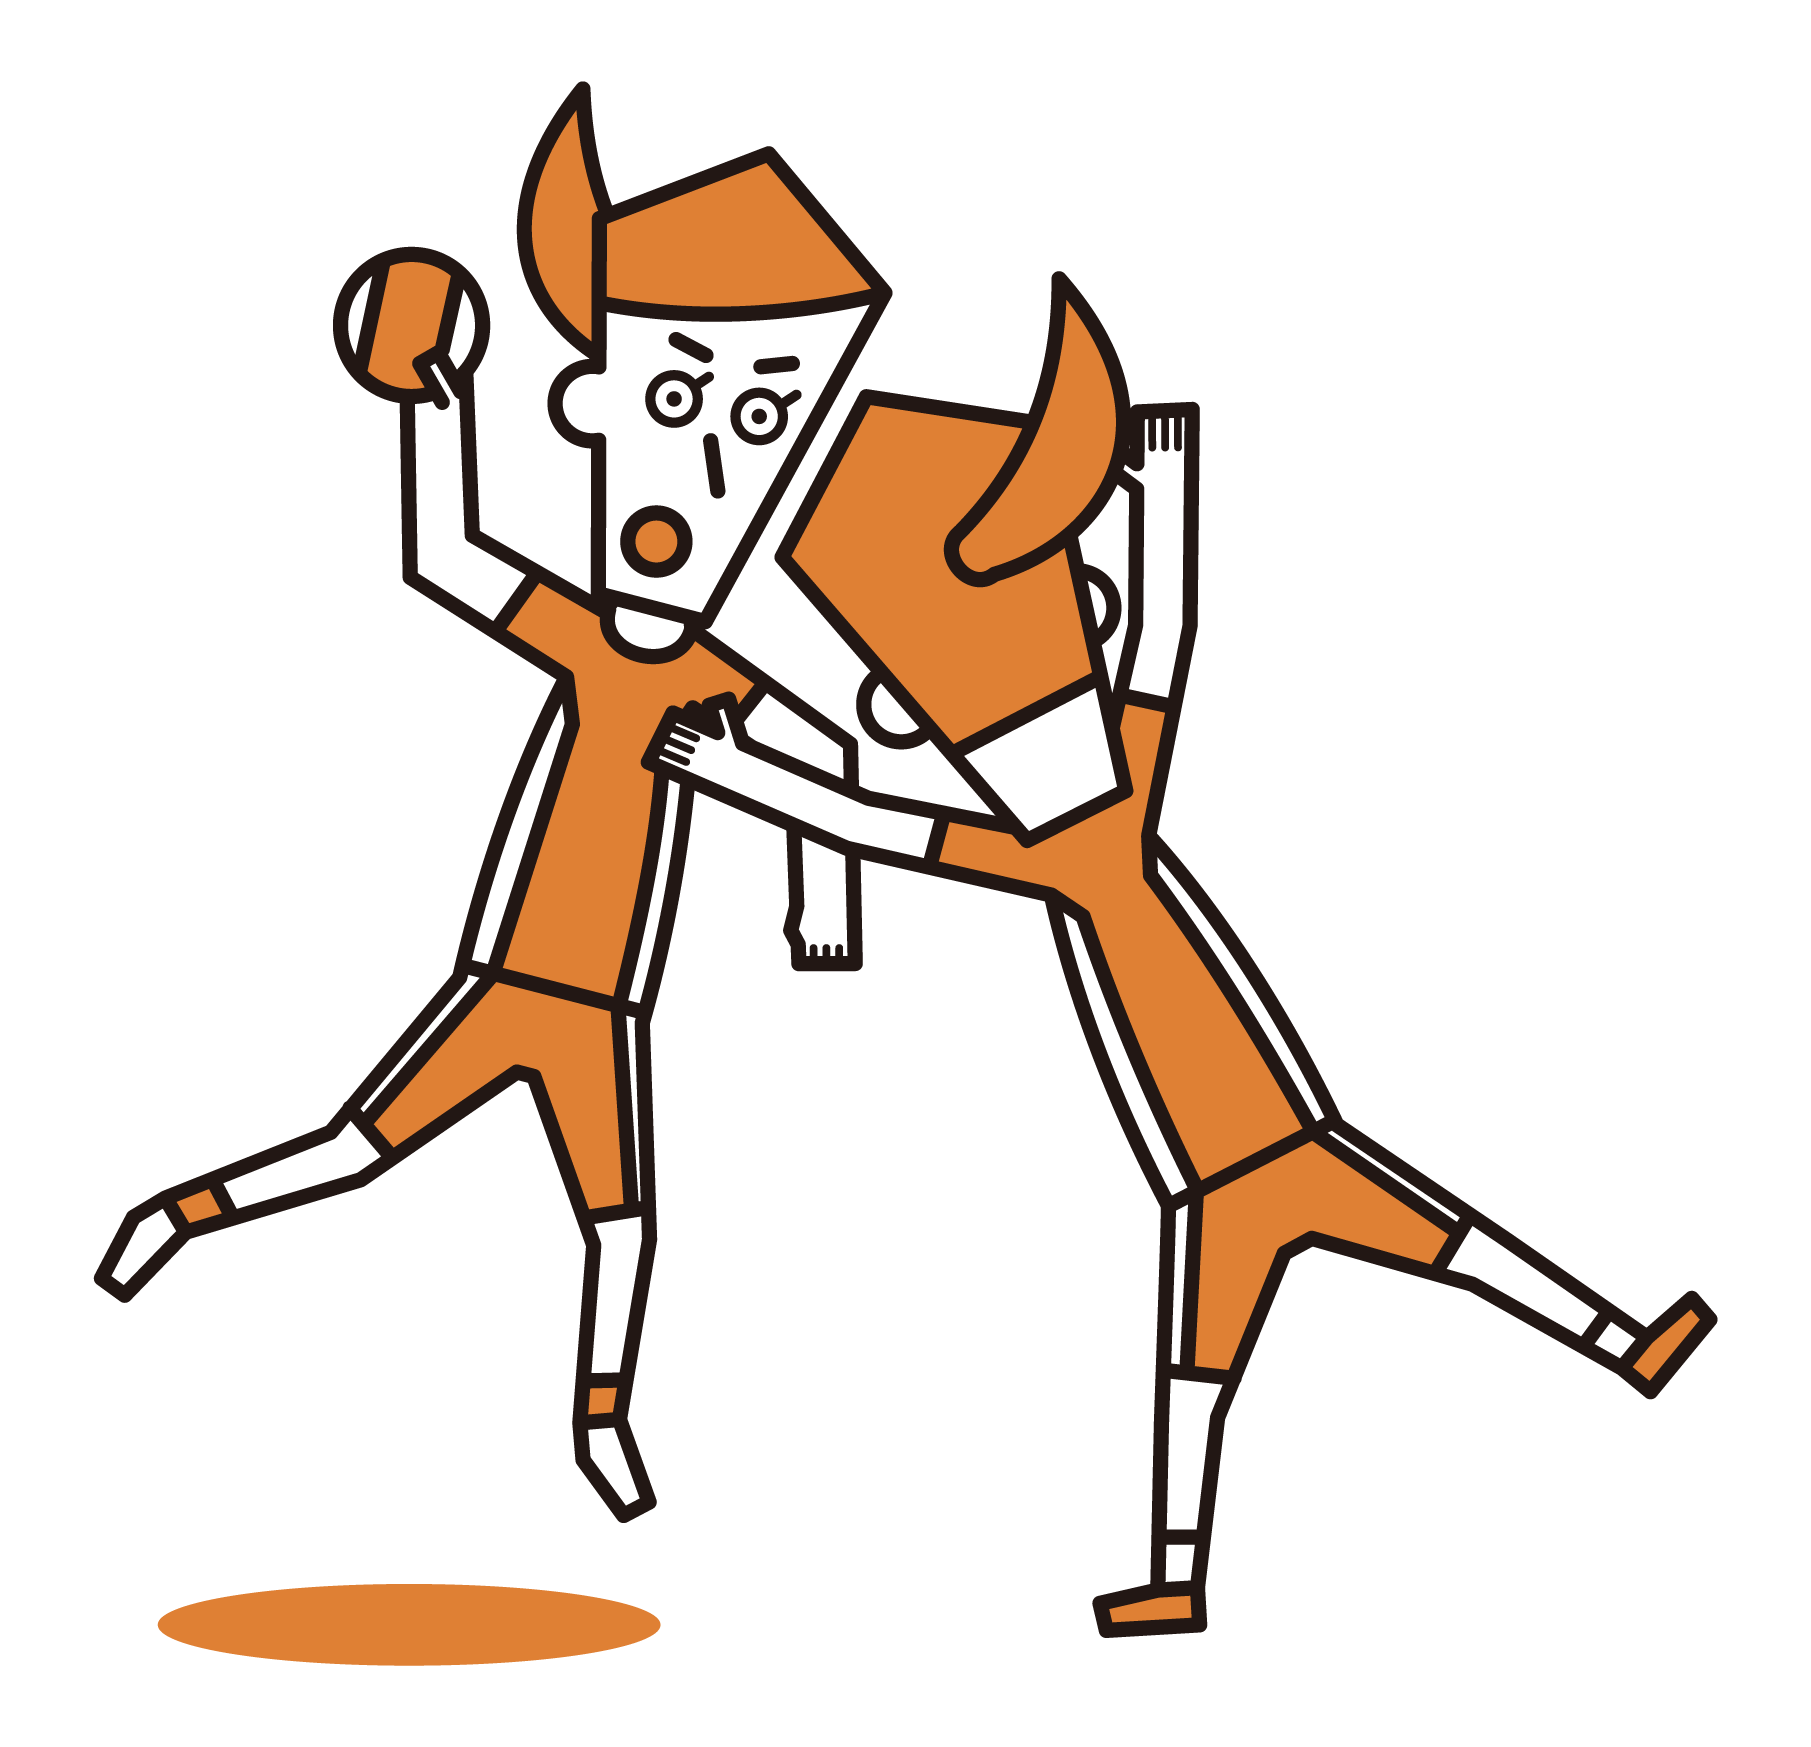 Illustration of a handball player (female) taking a shot